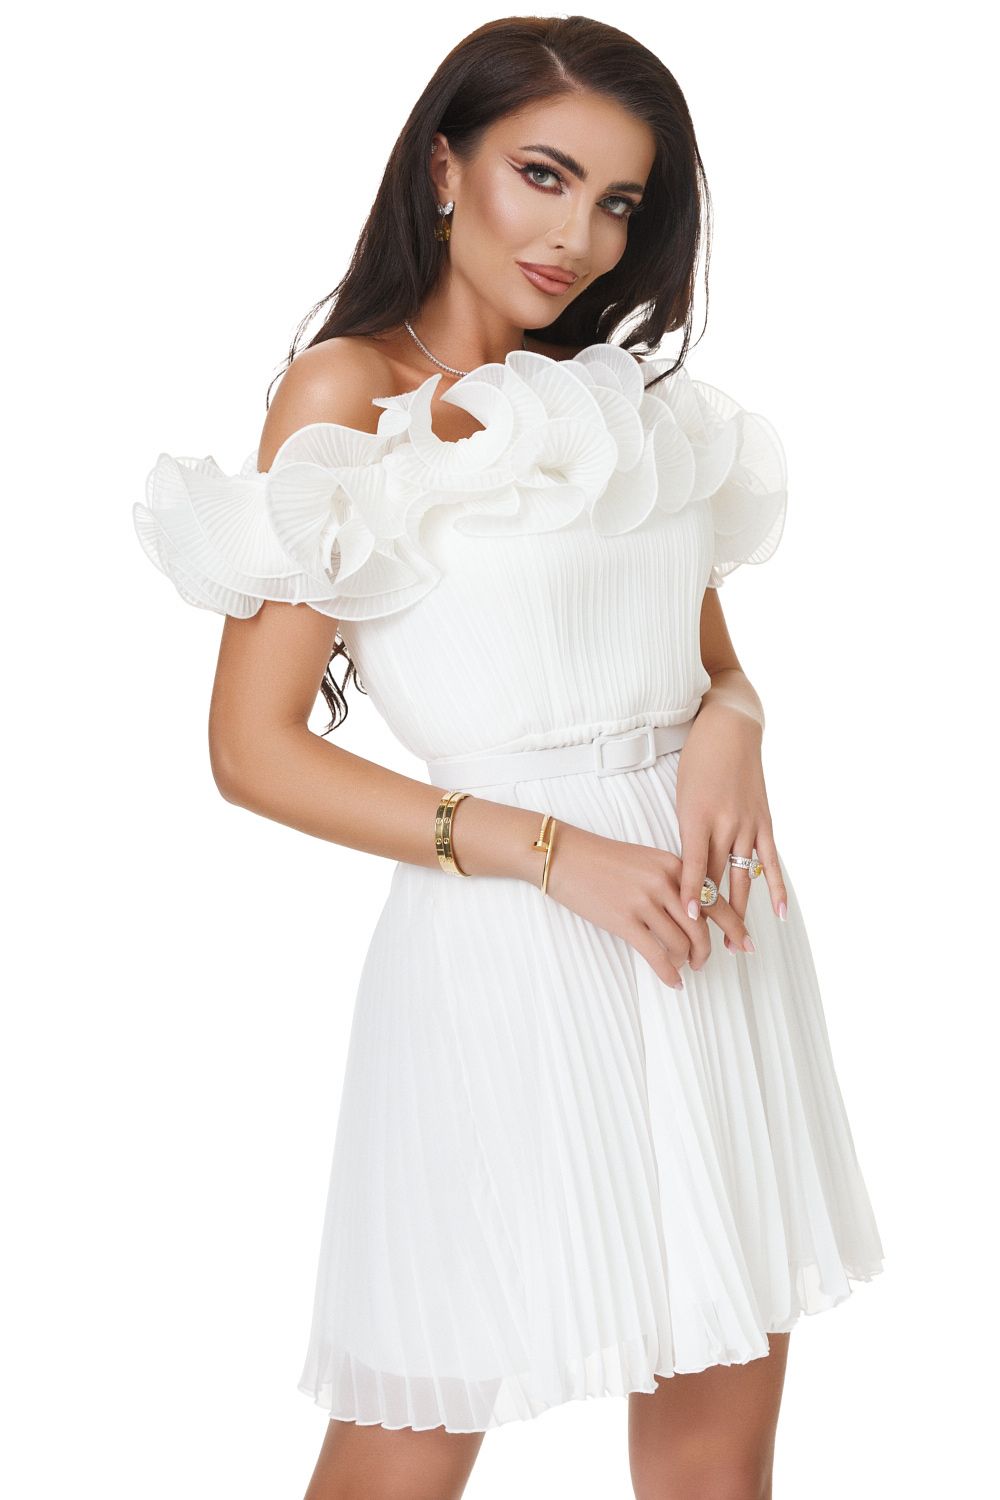 Ladies' short dress white Richiana Bogas